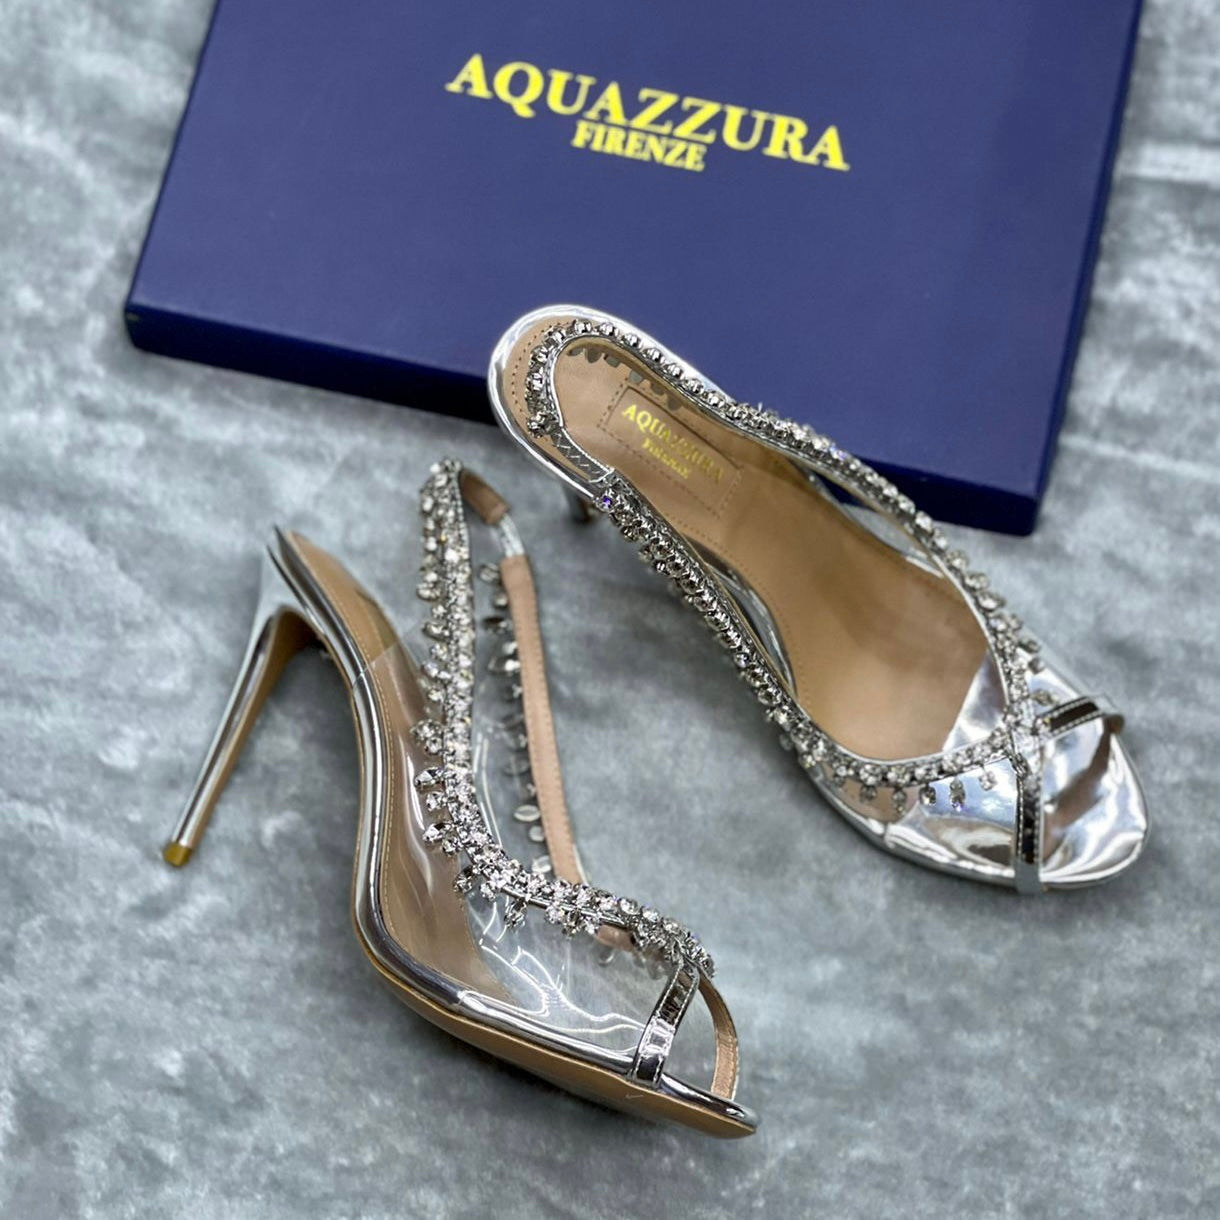 Aquazzura Style #1 Shoes